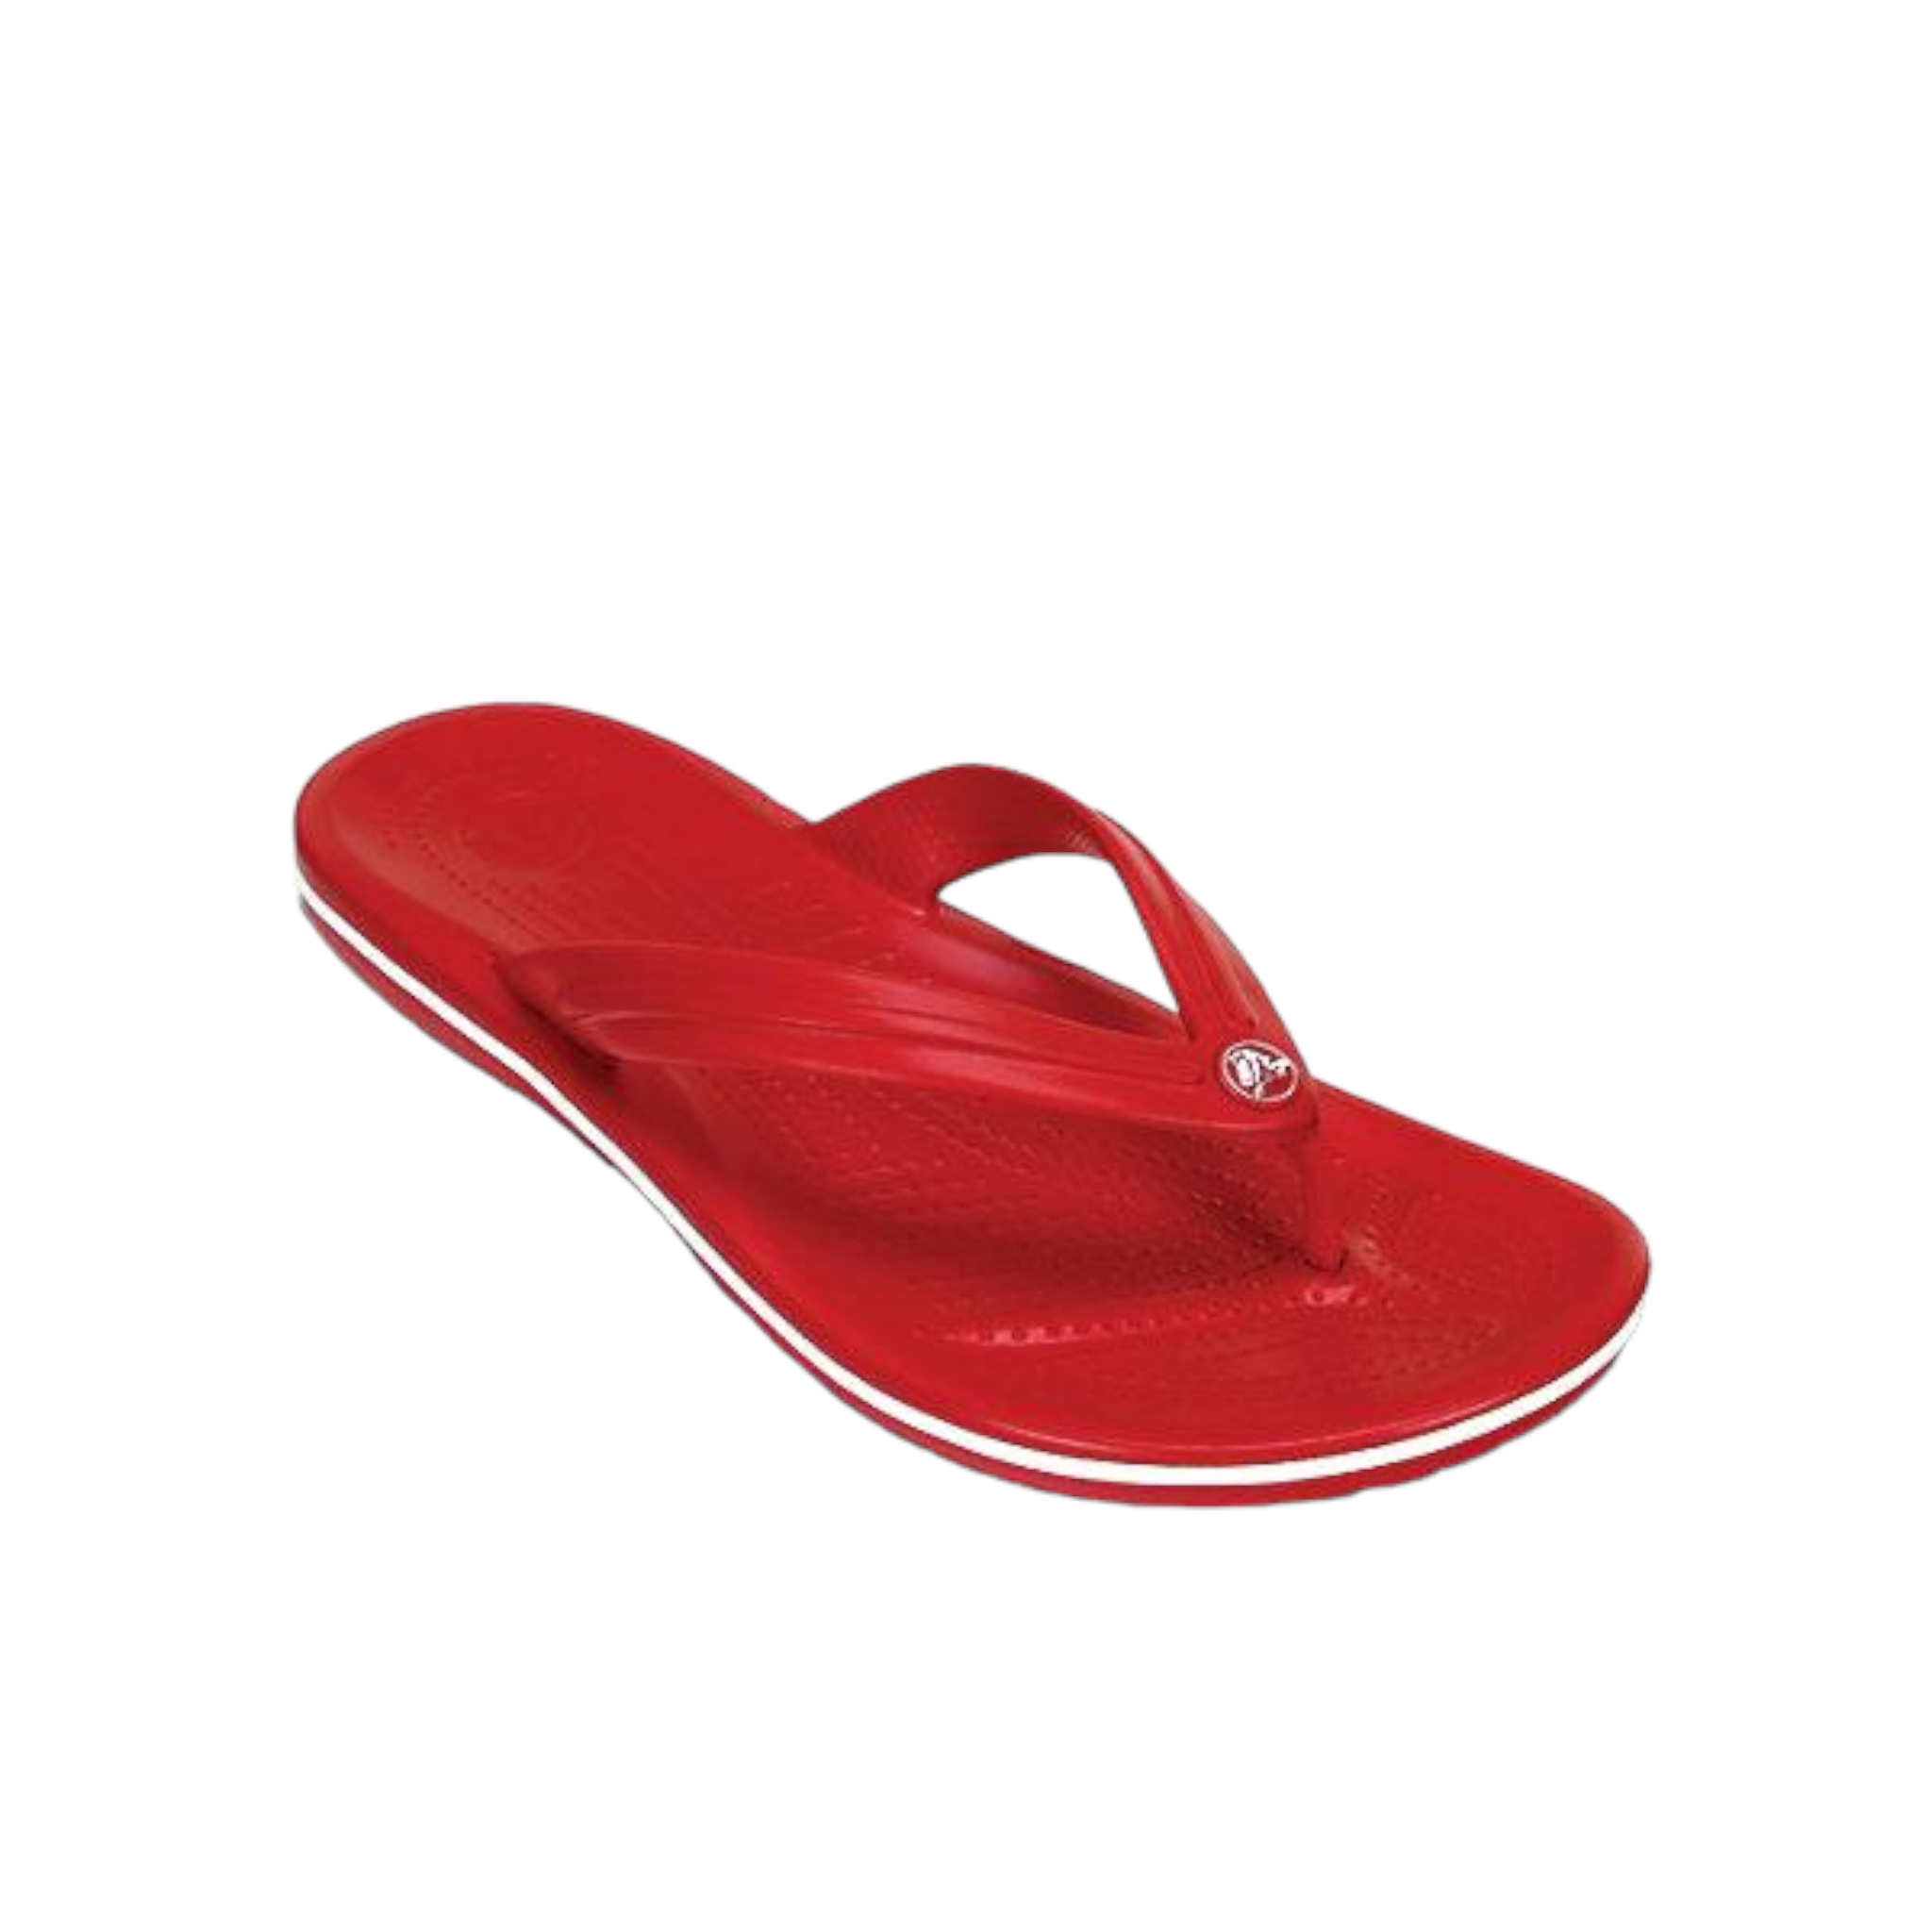 Crocband Flip - shoe&me - Crocs - Jandal - Jandals, Mens, Womens